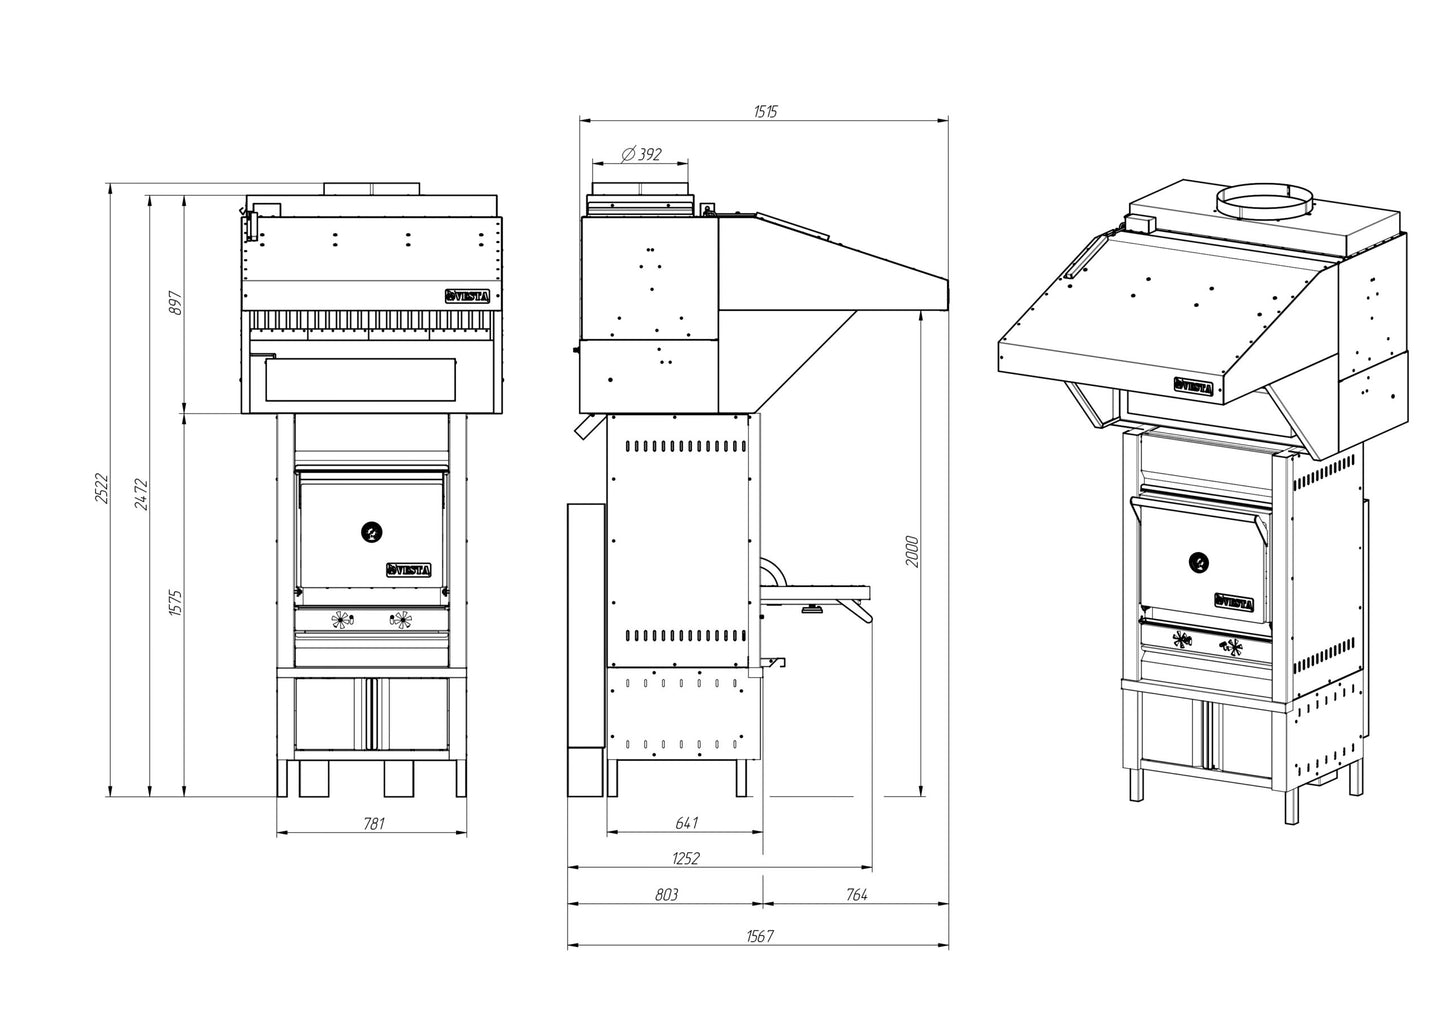 VESTA M25SD Vesta Charcoal  Oven M25 with Stand, Heating  Cabinet, Dry Spark  arrester